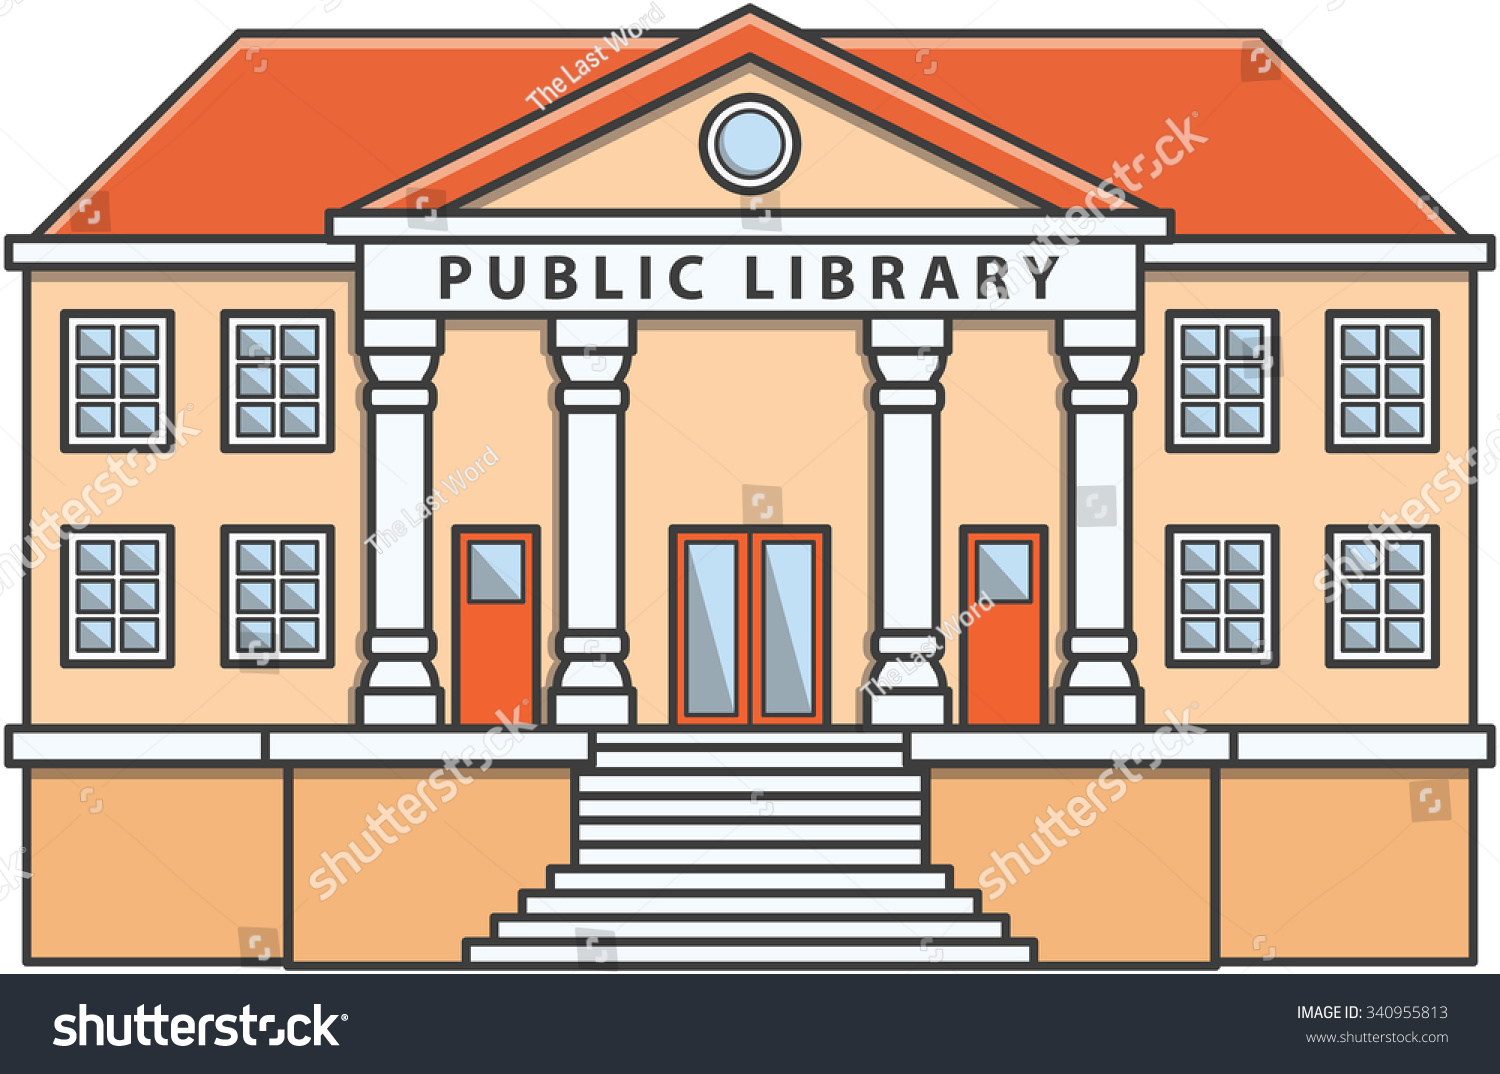 Download Public Library Doodle Illustration Cartoon Stock Vector 340955813 - Shutterstock